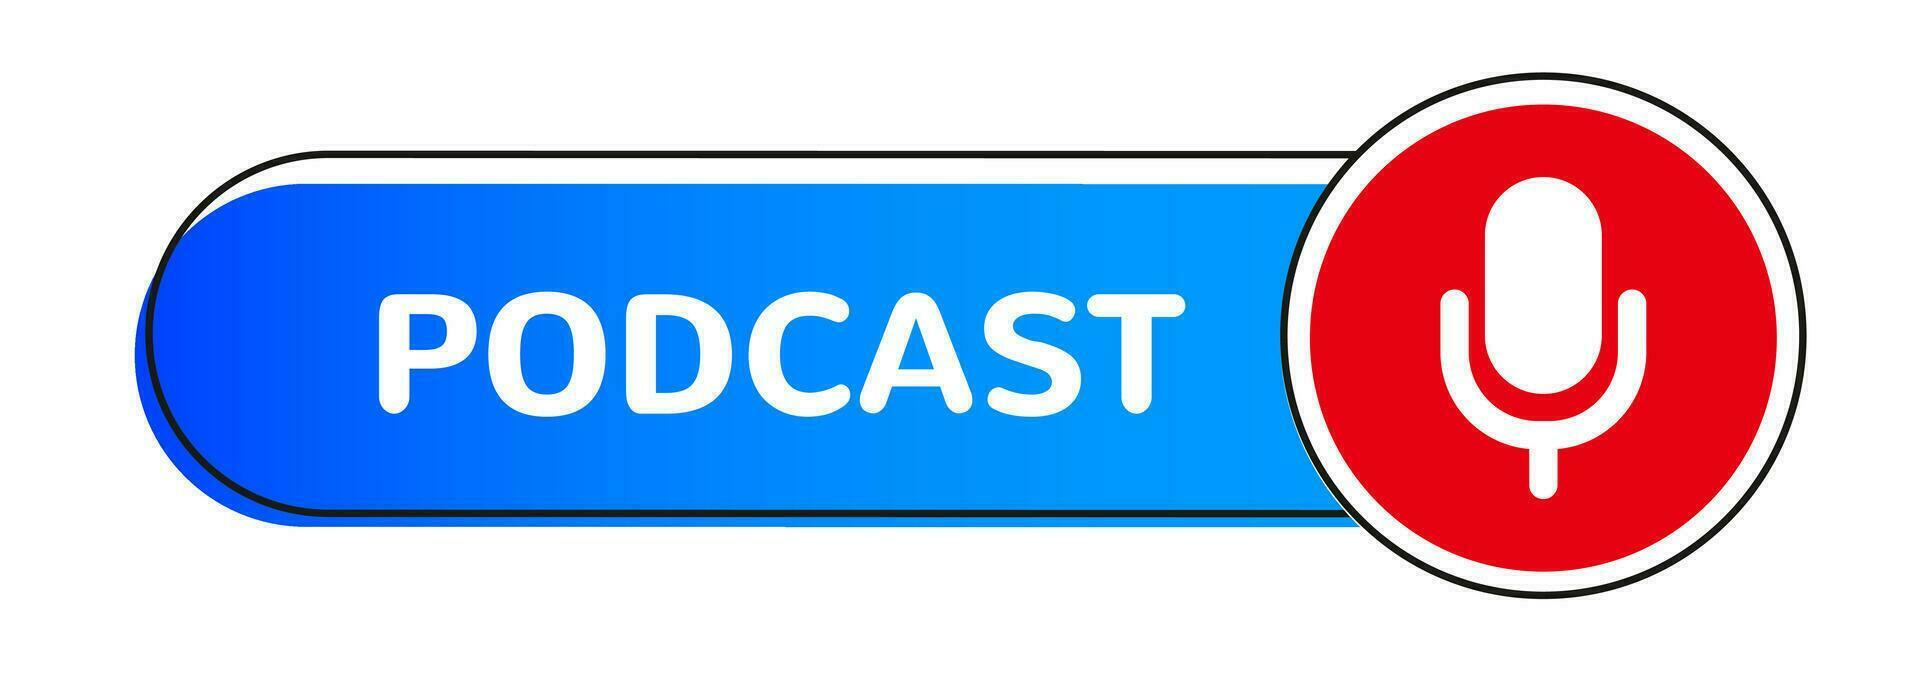 Podcast Emblem mit Mikrofon isoliert vektor